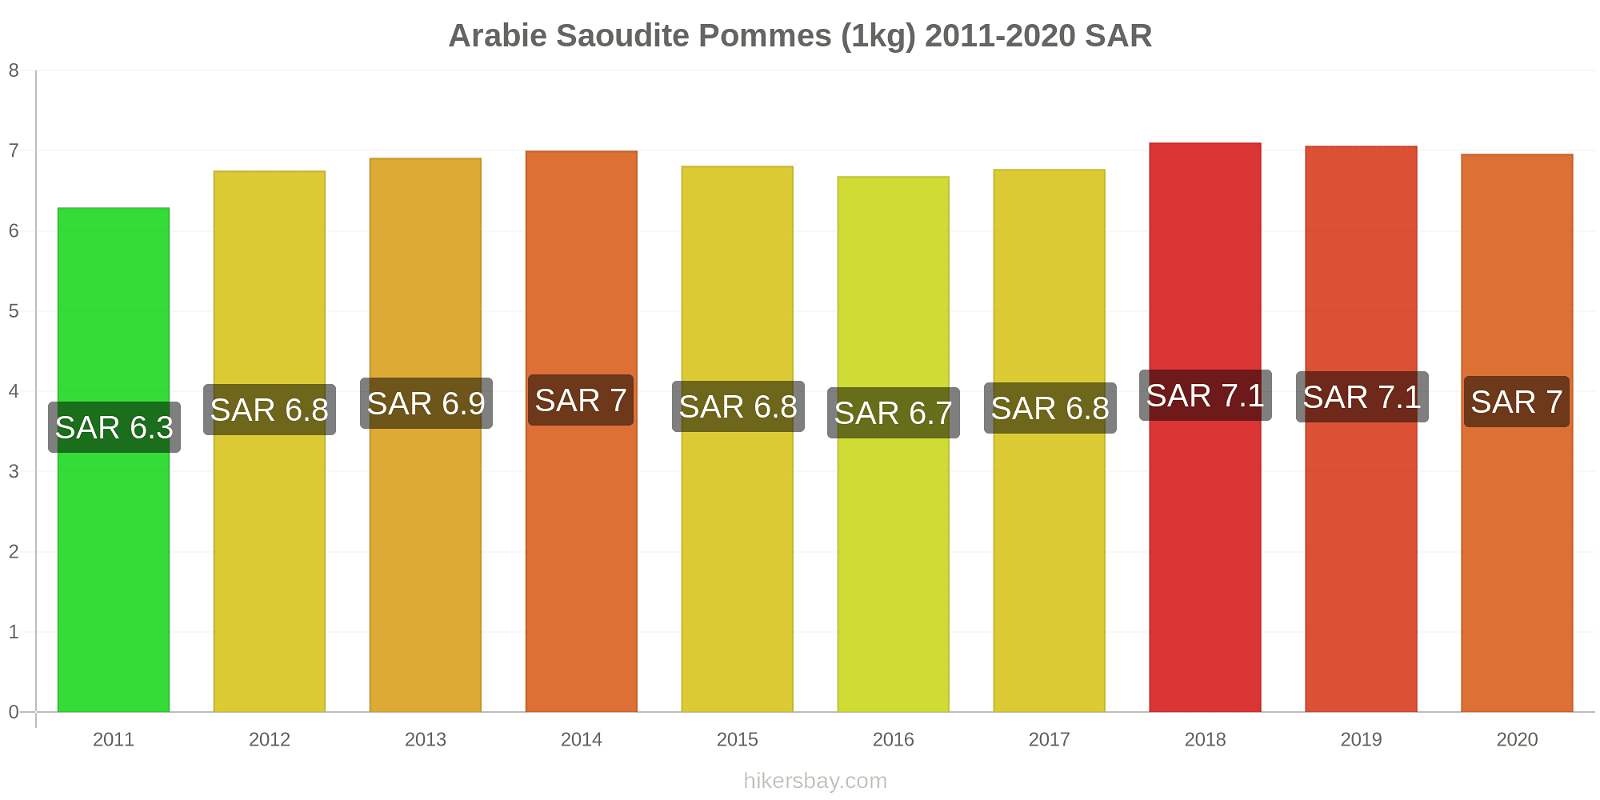 Arabie Saoudite changements de prix Pommes (1kg) hikersbay.com